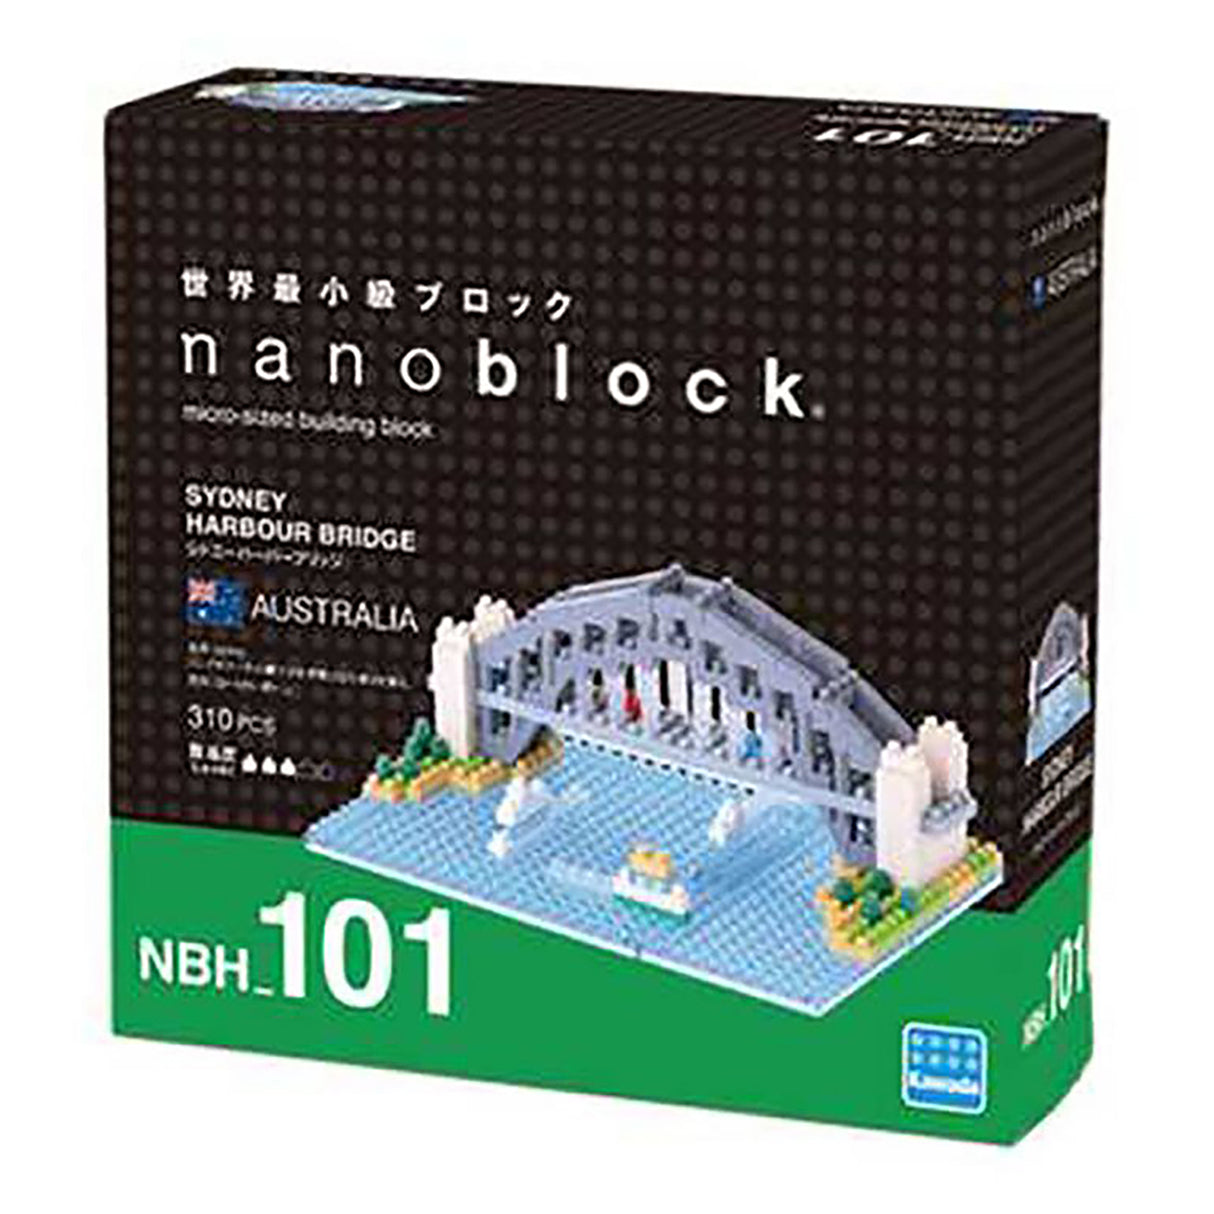 nanoblock Syd Harbour Bridge (310 pieces)